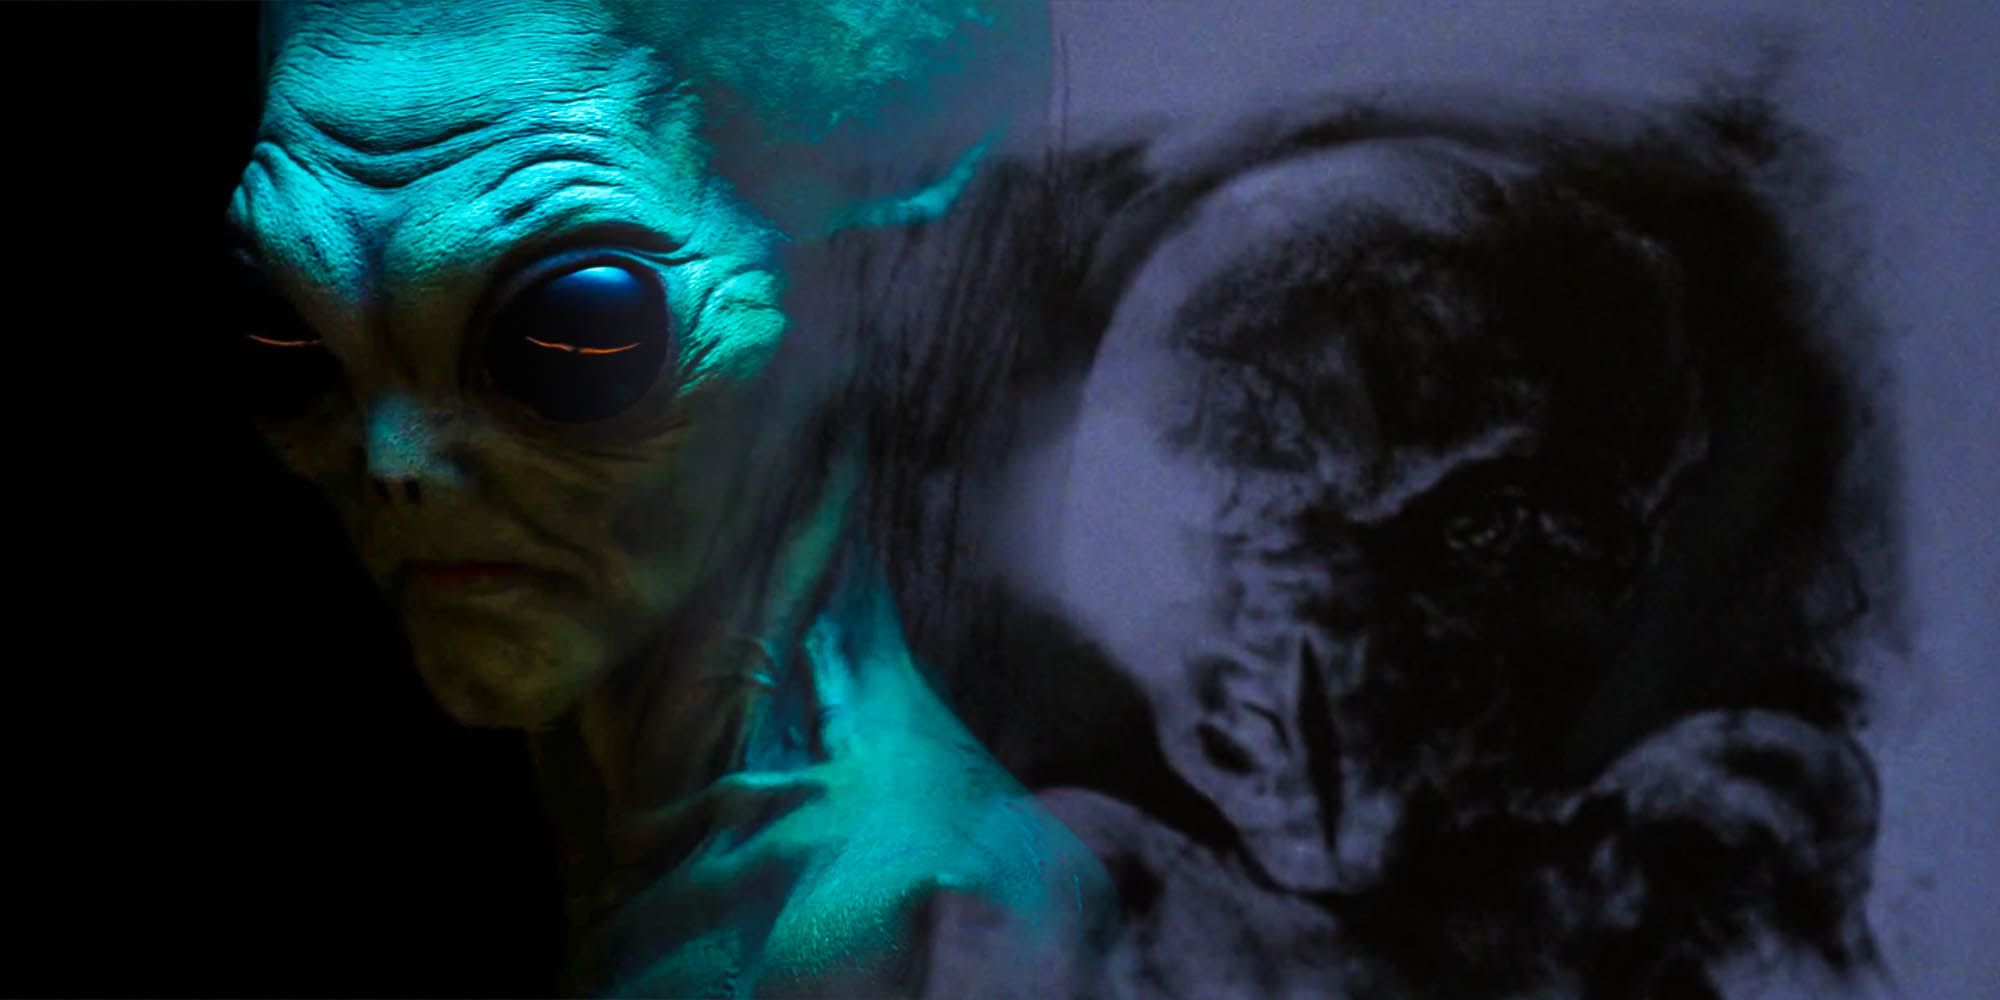 American horror story death valley aliens asylum extraterrestrials